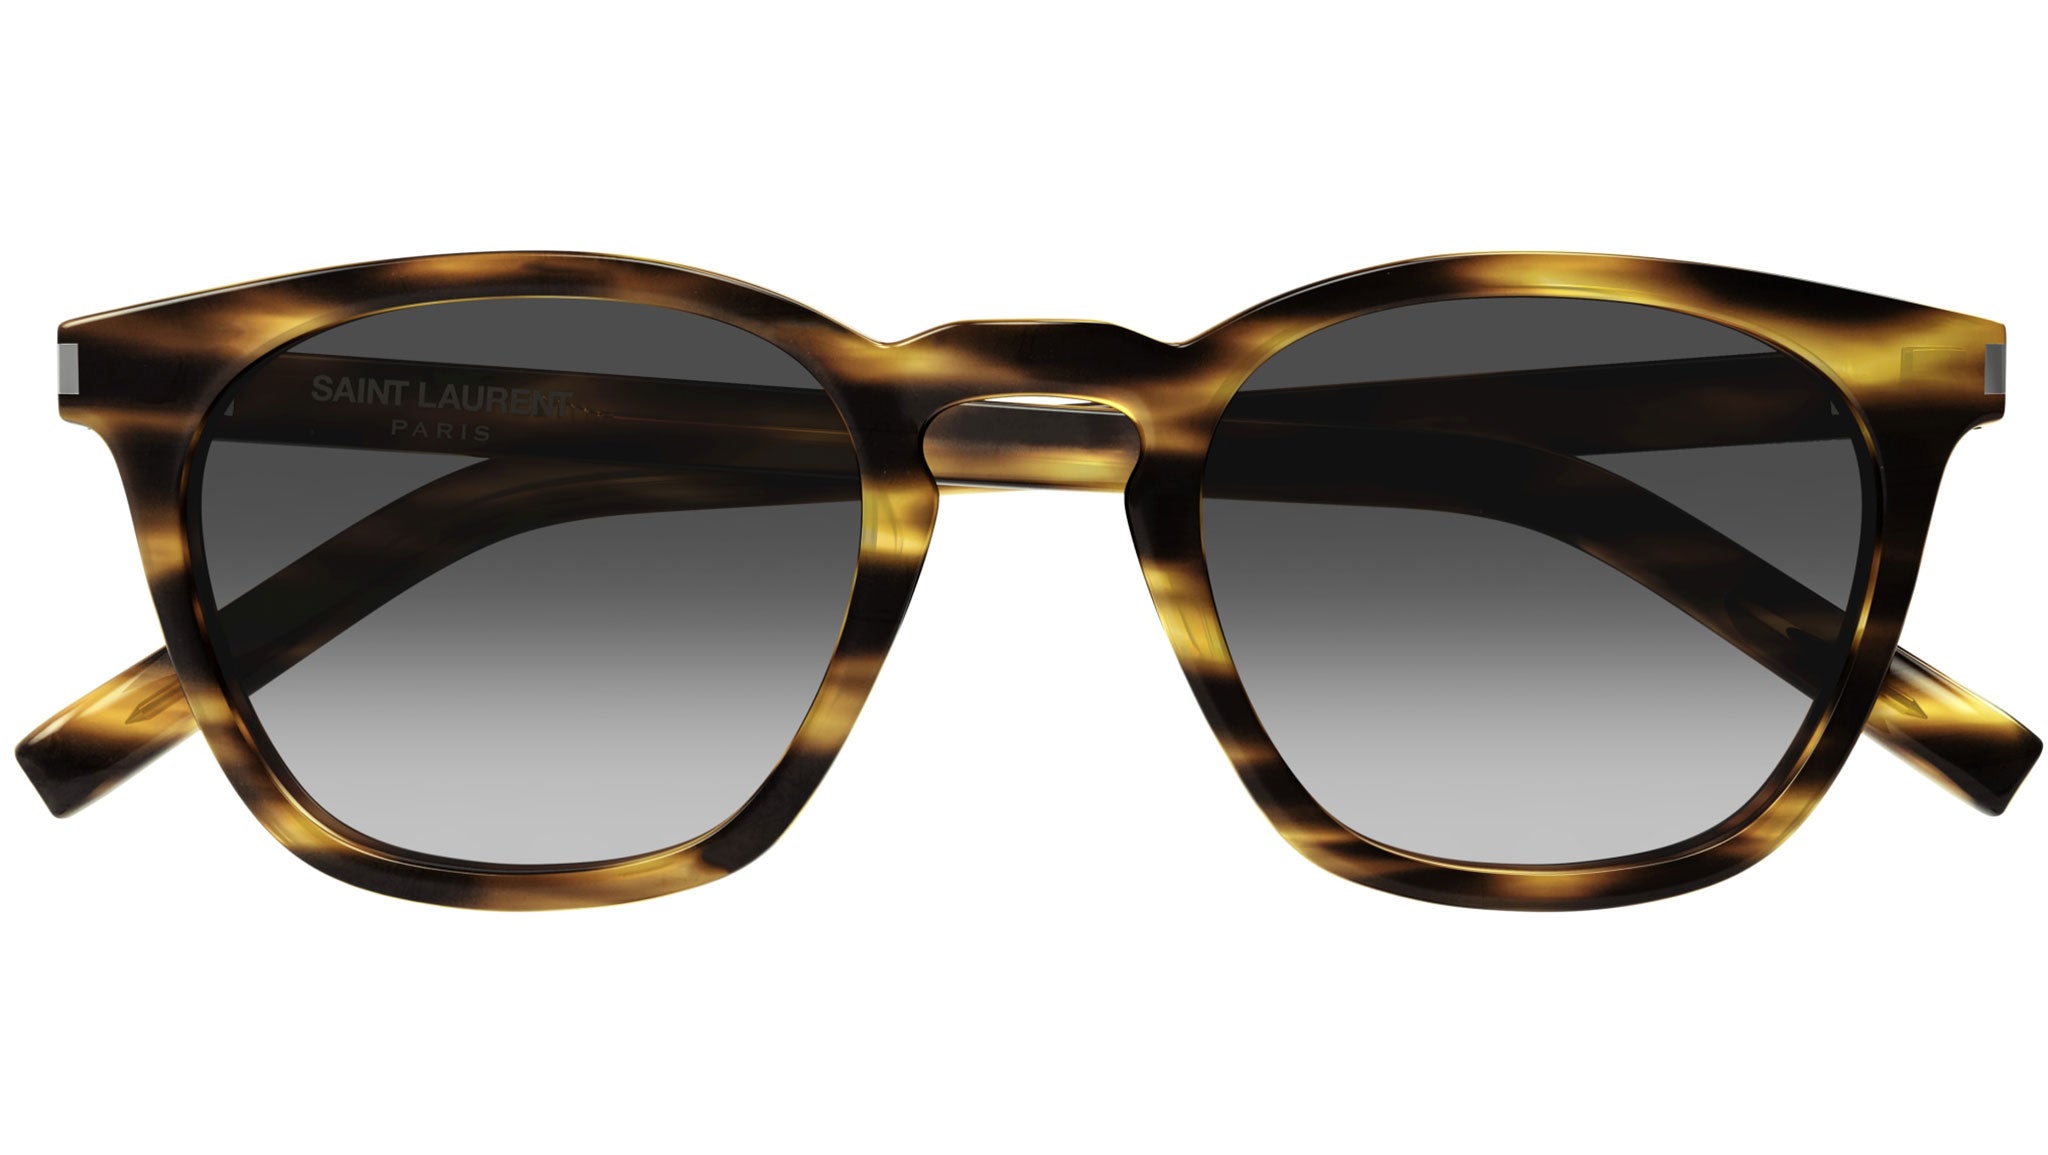 Saint Laurent Sunglasses Saint Laurent SL 28 Slim Sunglasses Beige/Silver |  30008257006 | FOOTY.COM